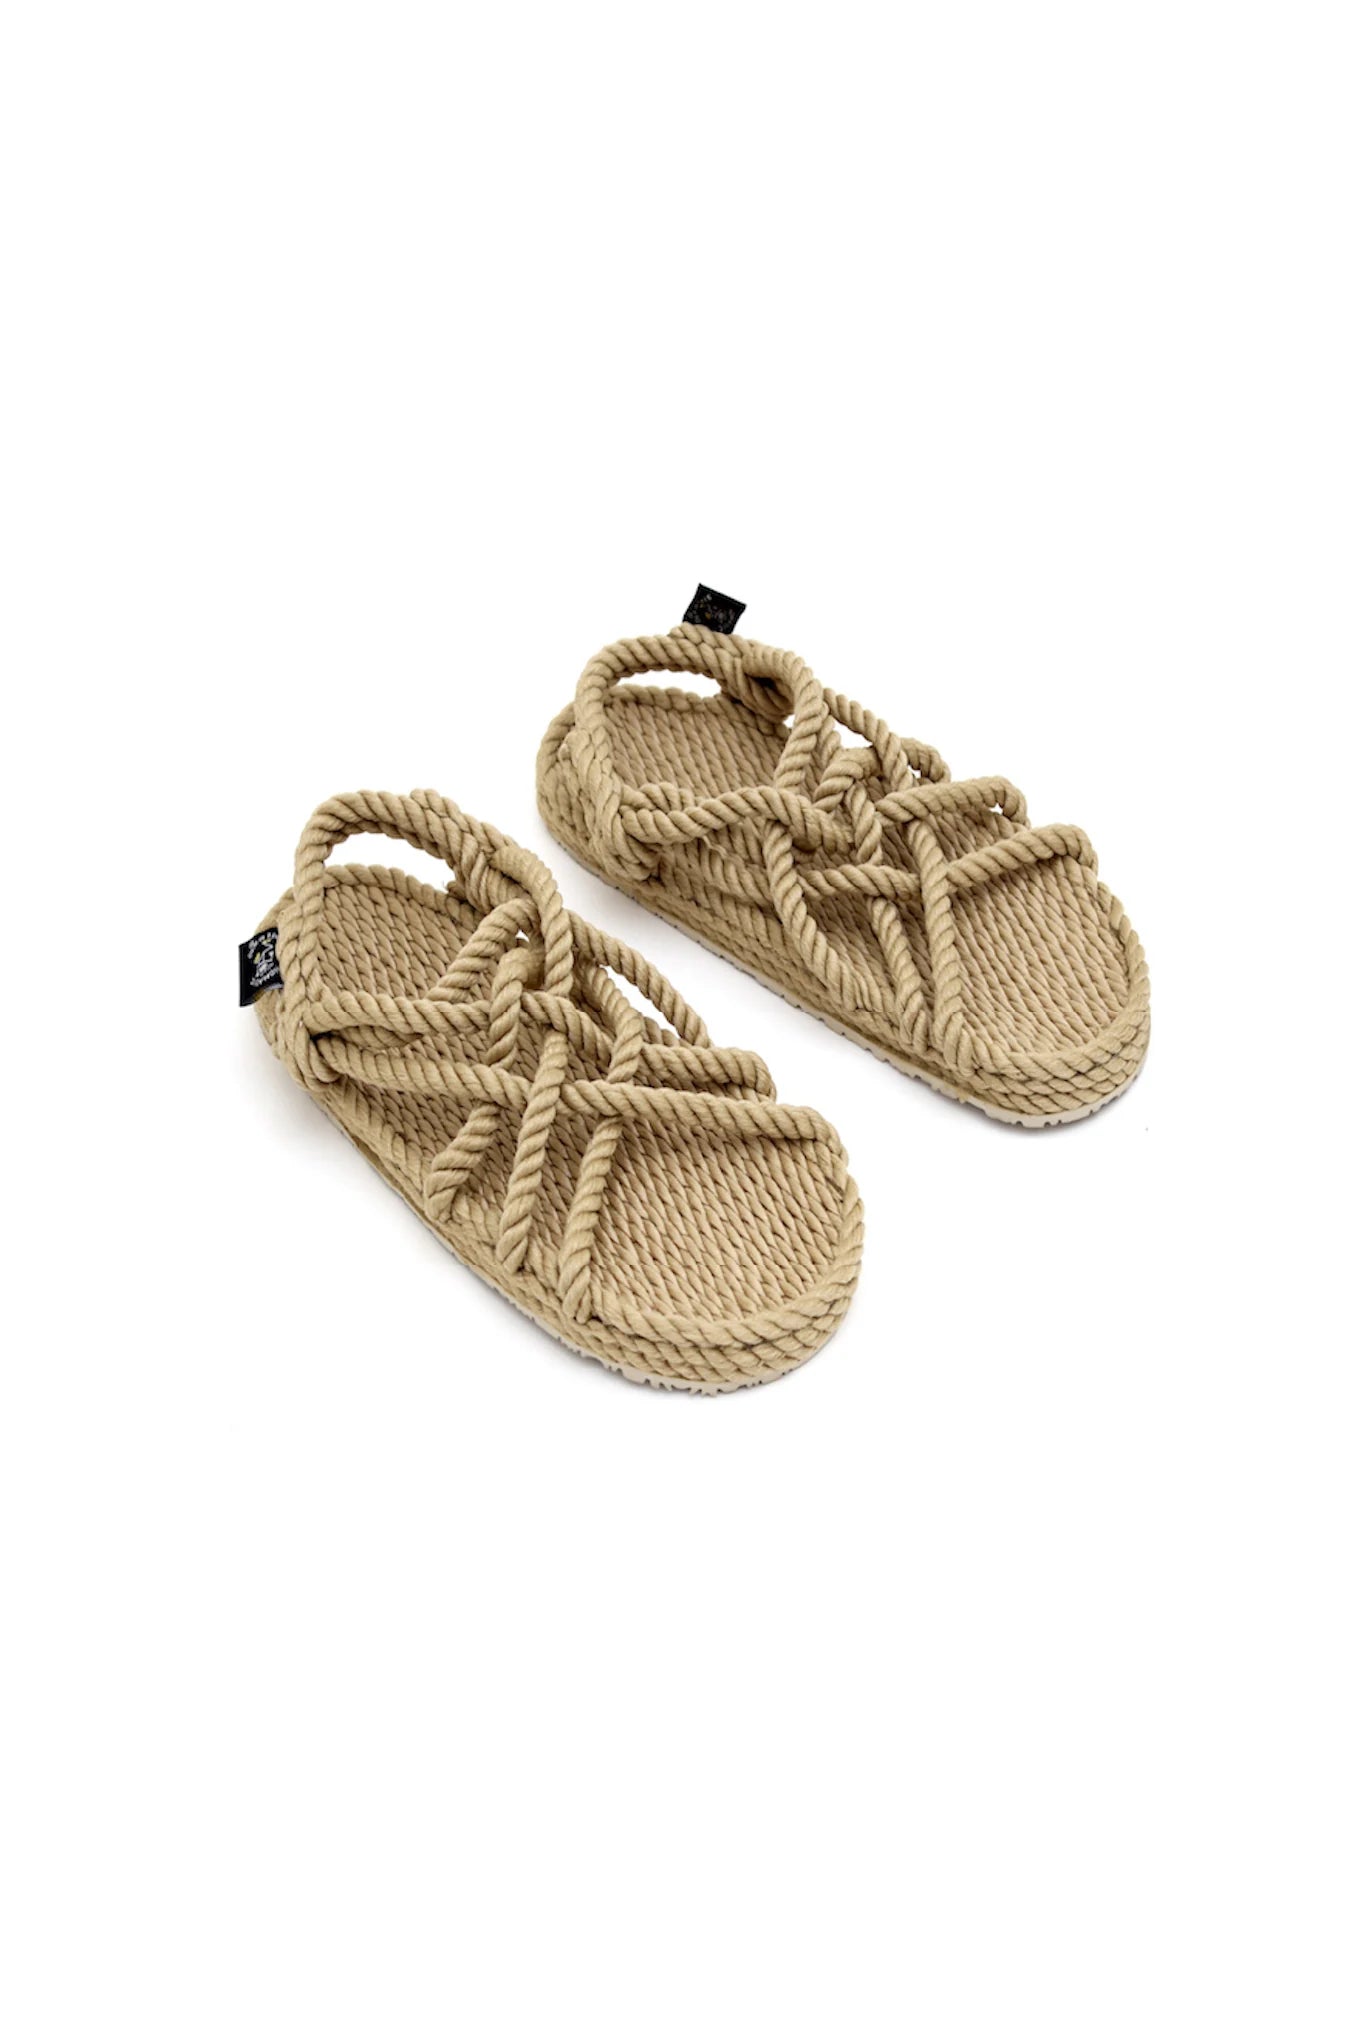 White Crossed Nomadic Rope Sandals | mumka – Mumka Shoes